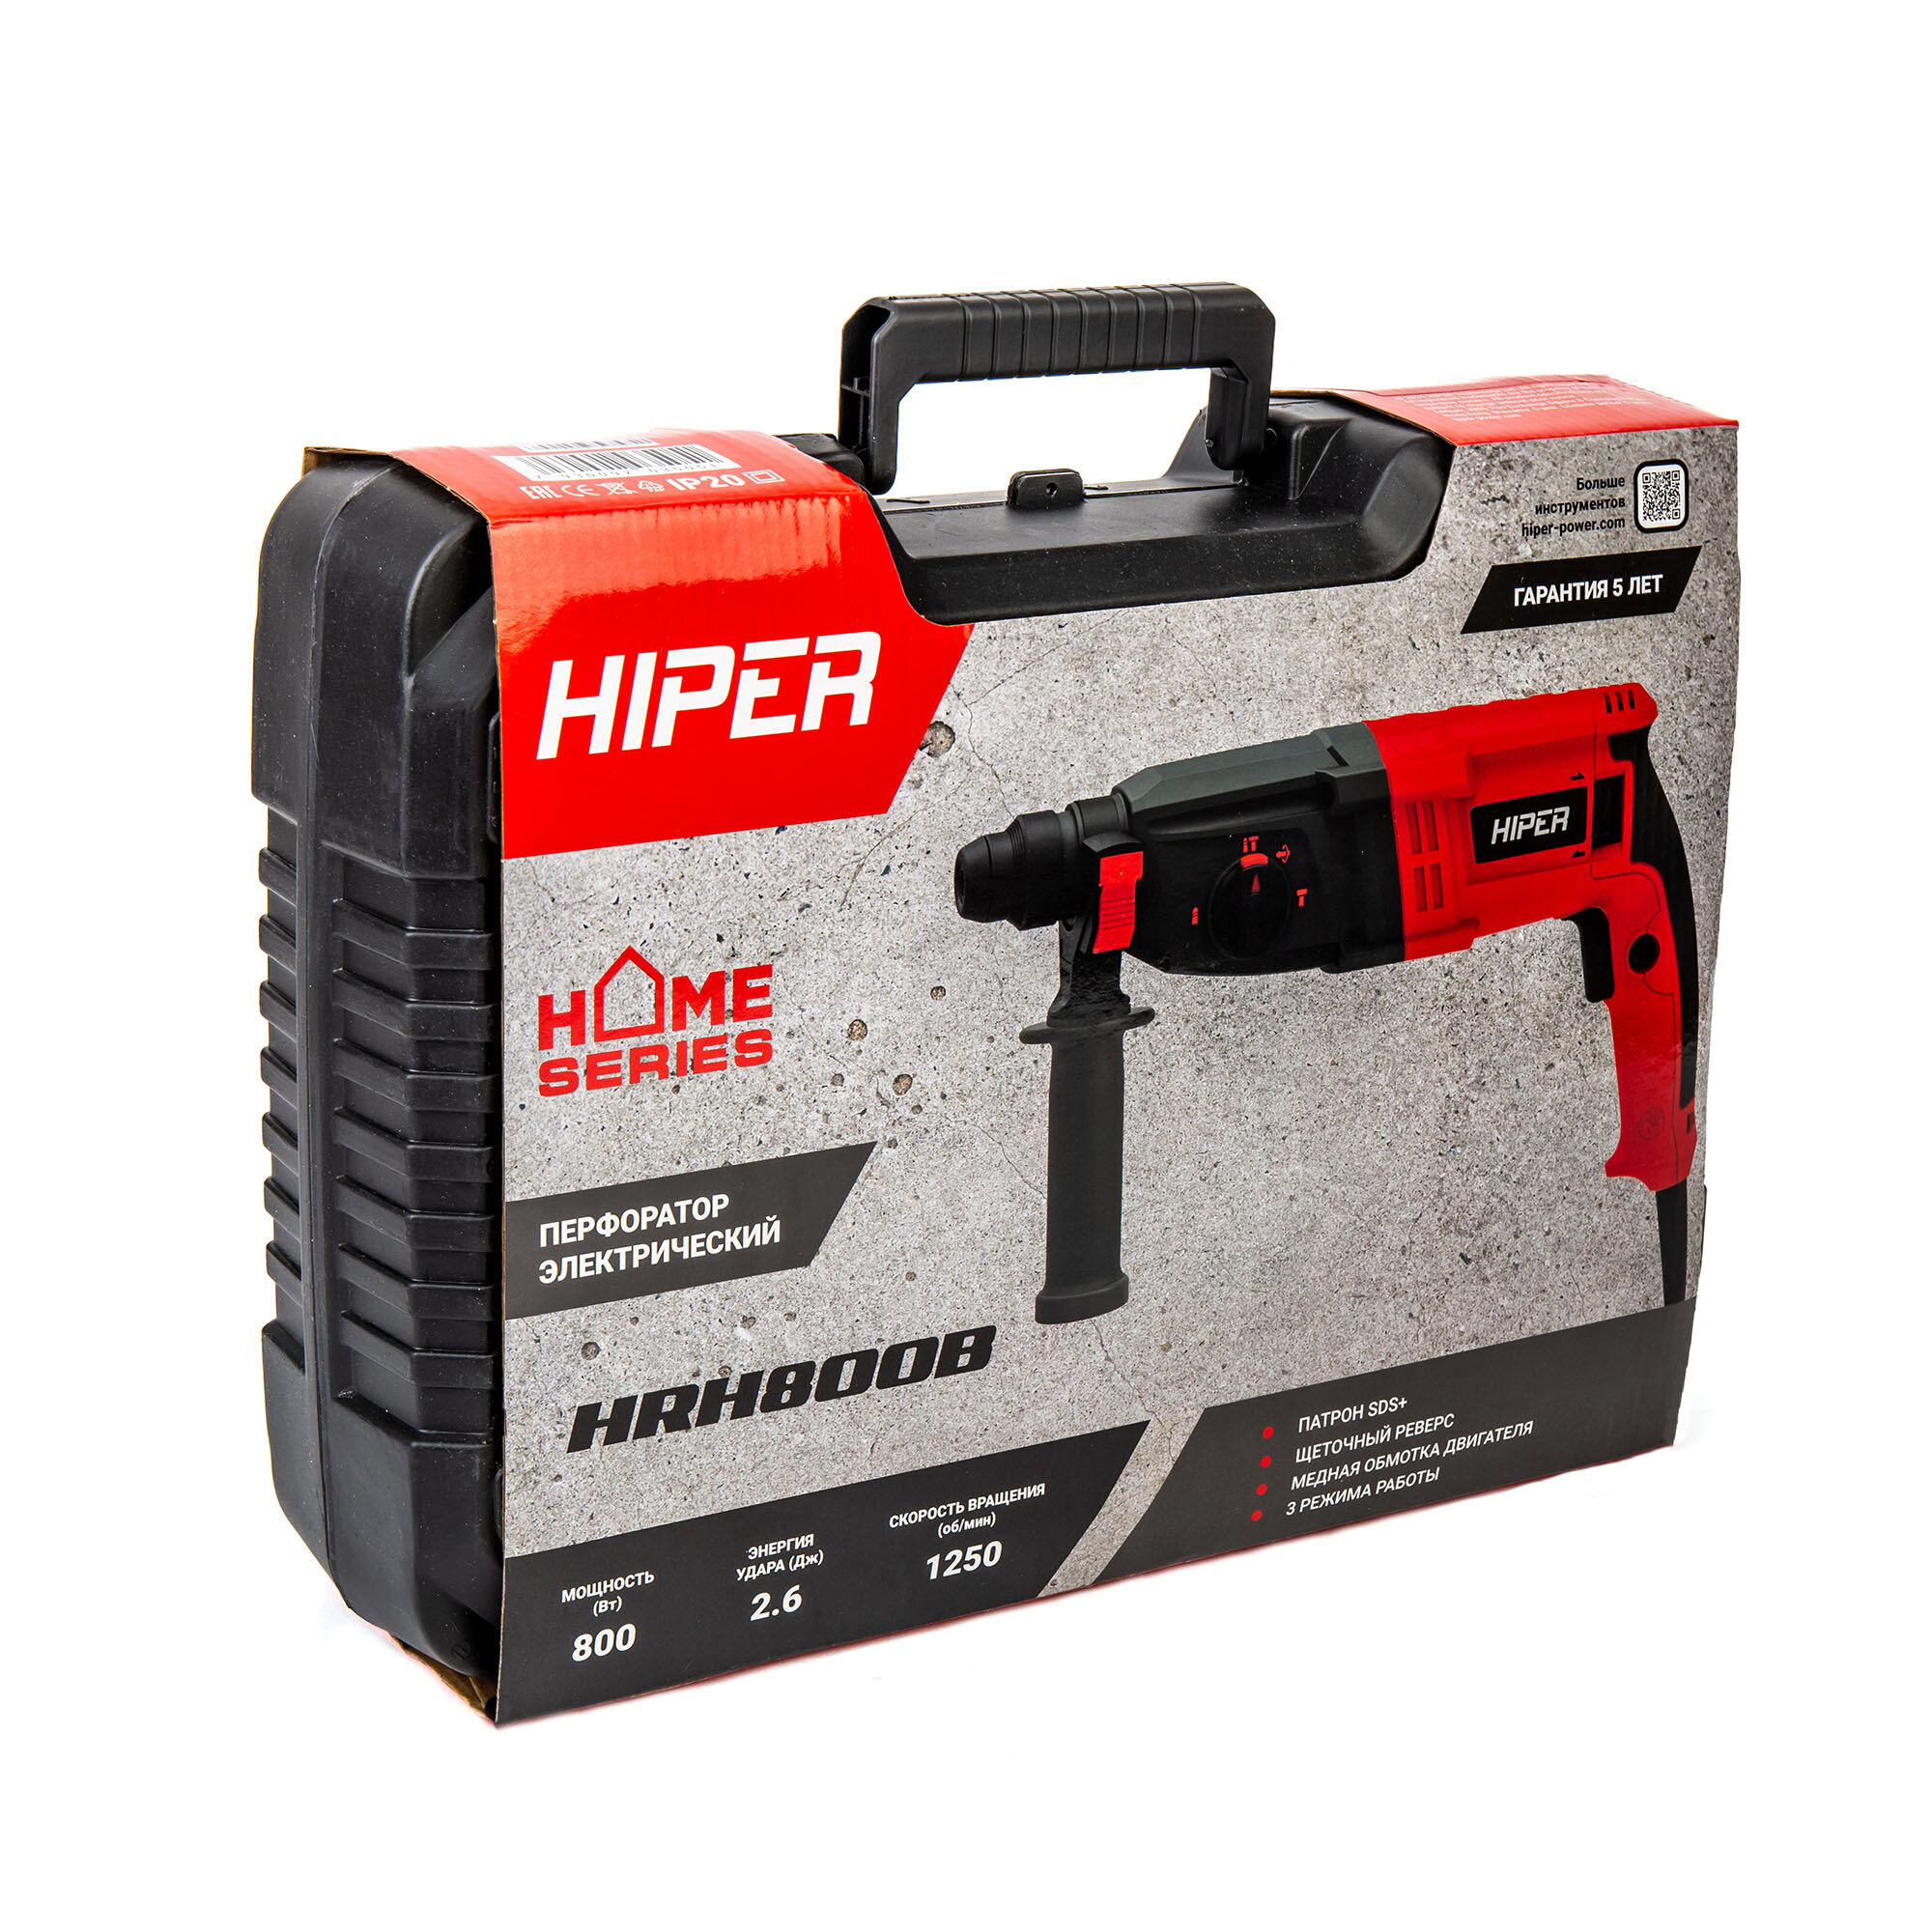 Перфоратор HIPER 800 W, сила удара 3Дж, 3 режима, 0 - 2000 rpm, SDS plus - фото №12